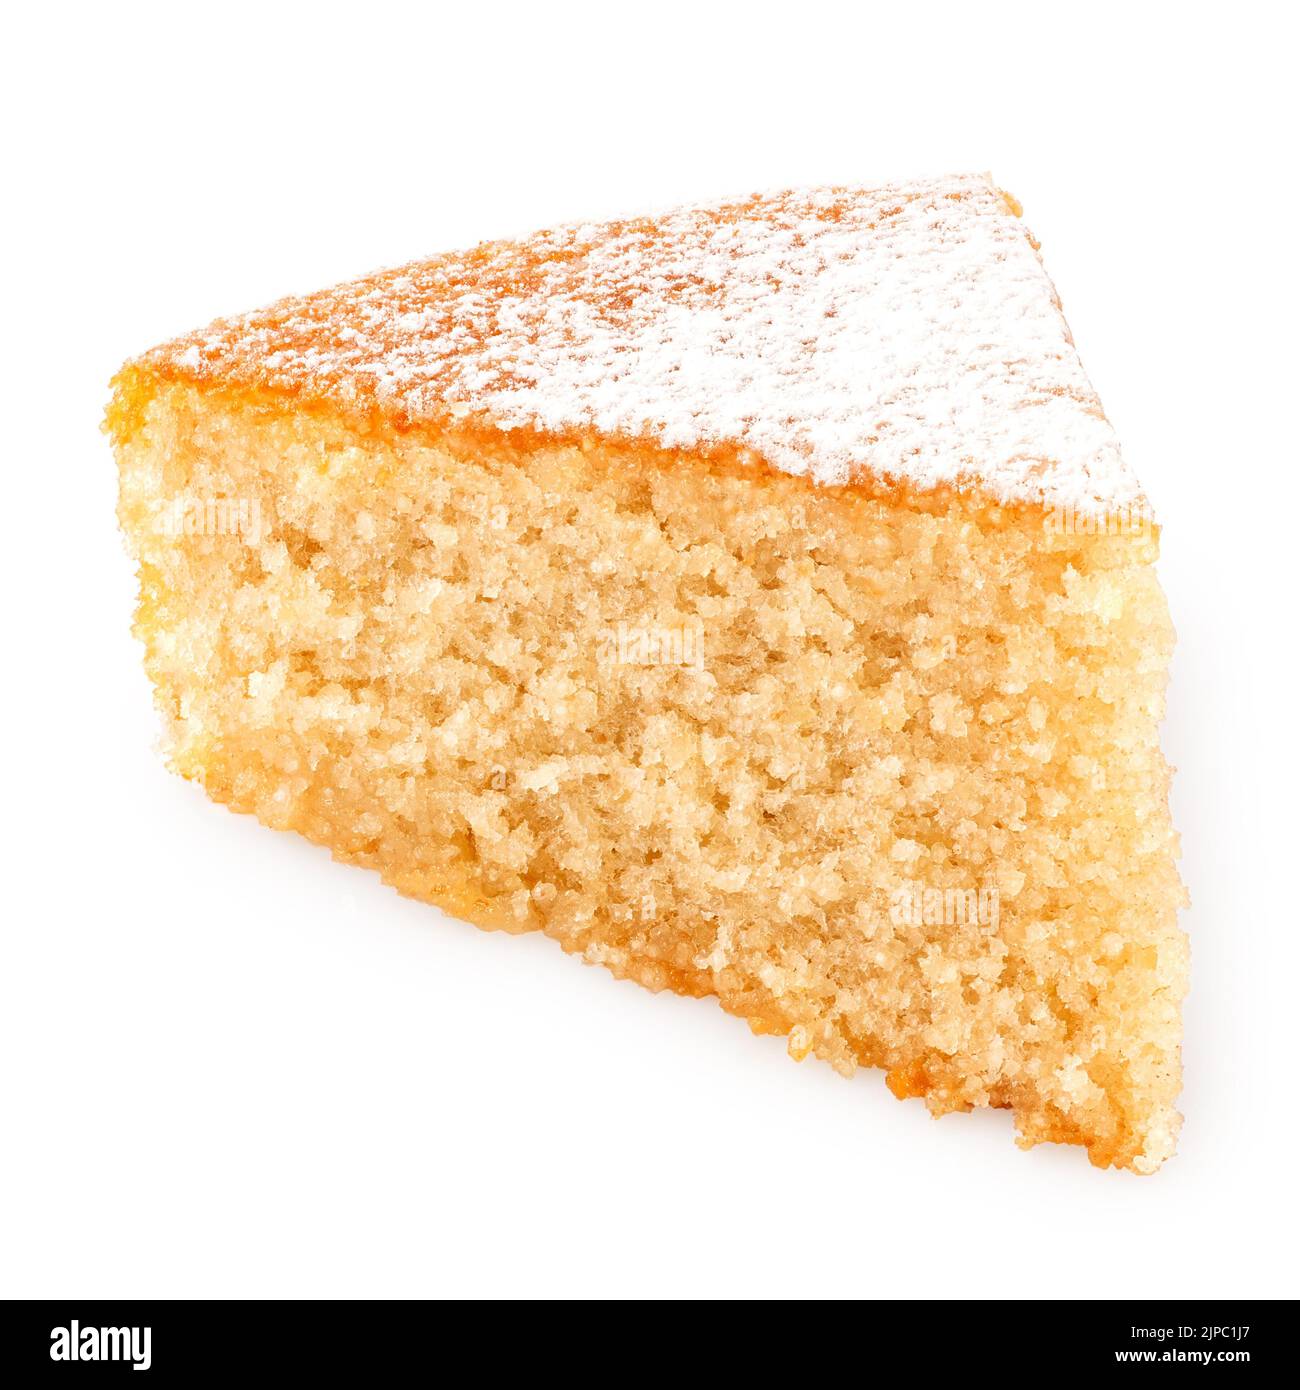 Wedge of lemon sponge cake with icing sugar topping isolated on white. Stock Photo